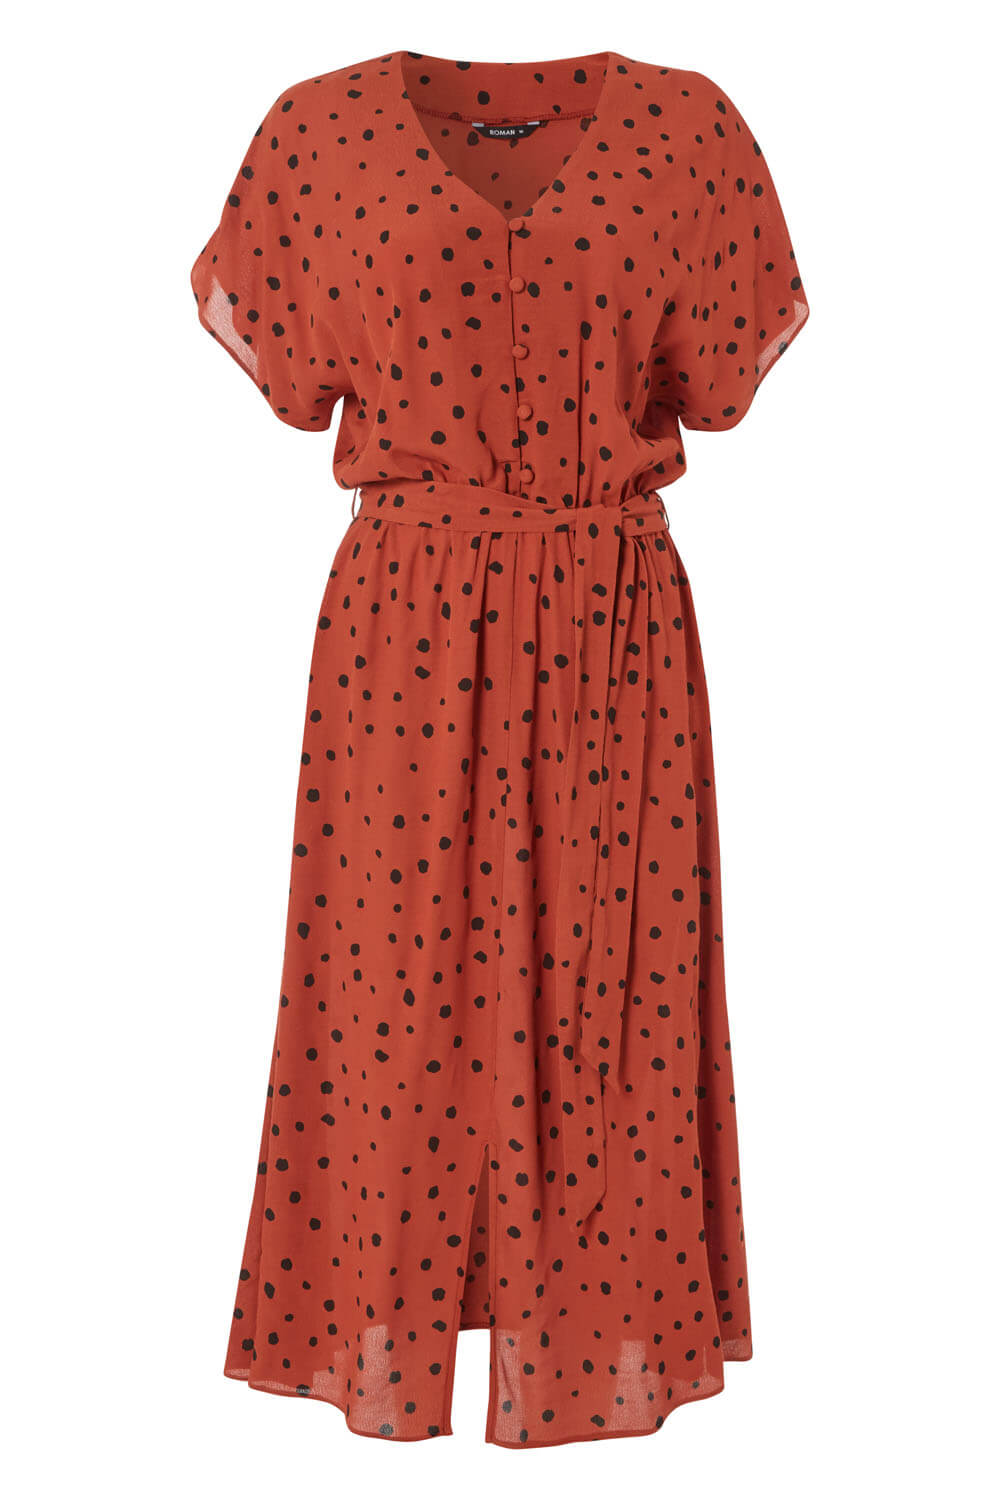 Rust Polka Dot Midi Tea Dress, Image 5 of 5